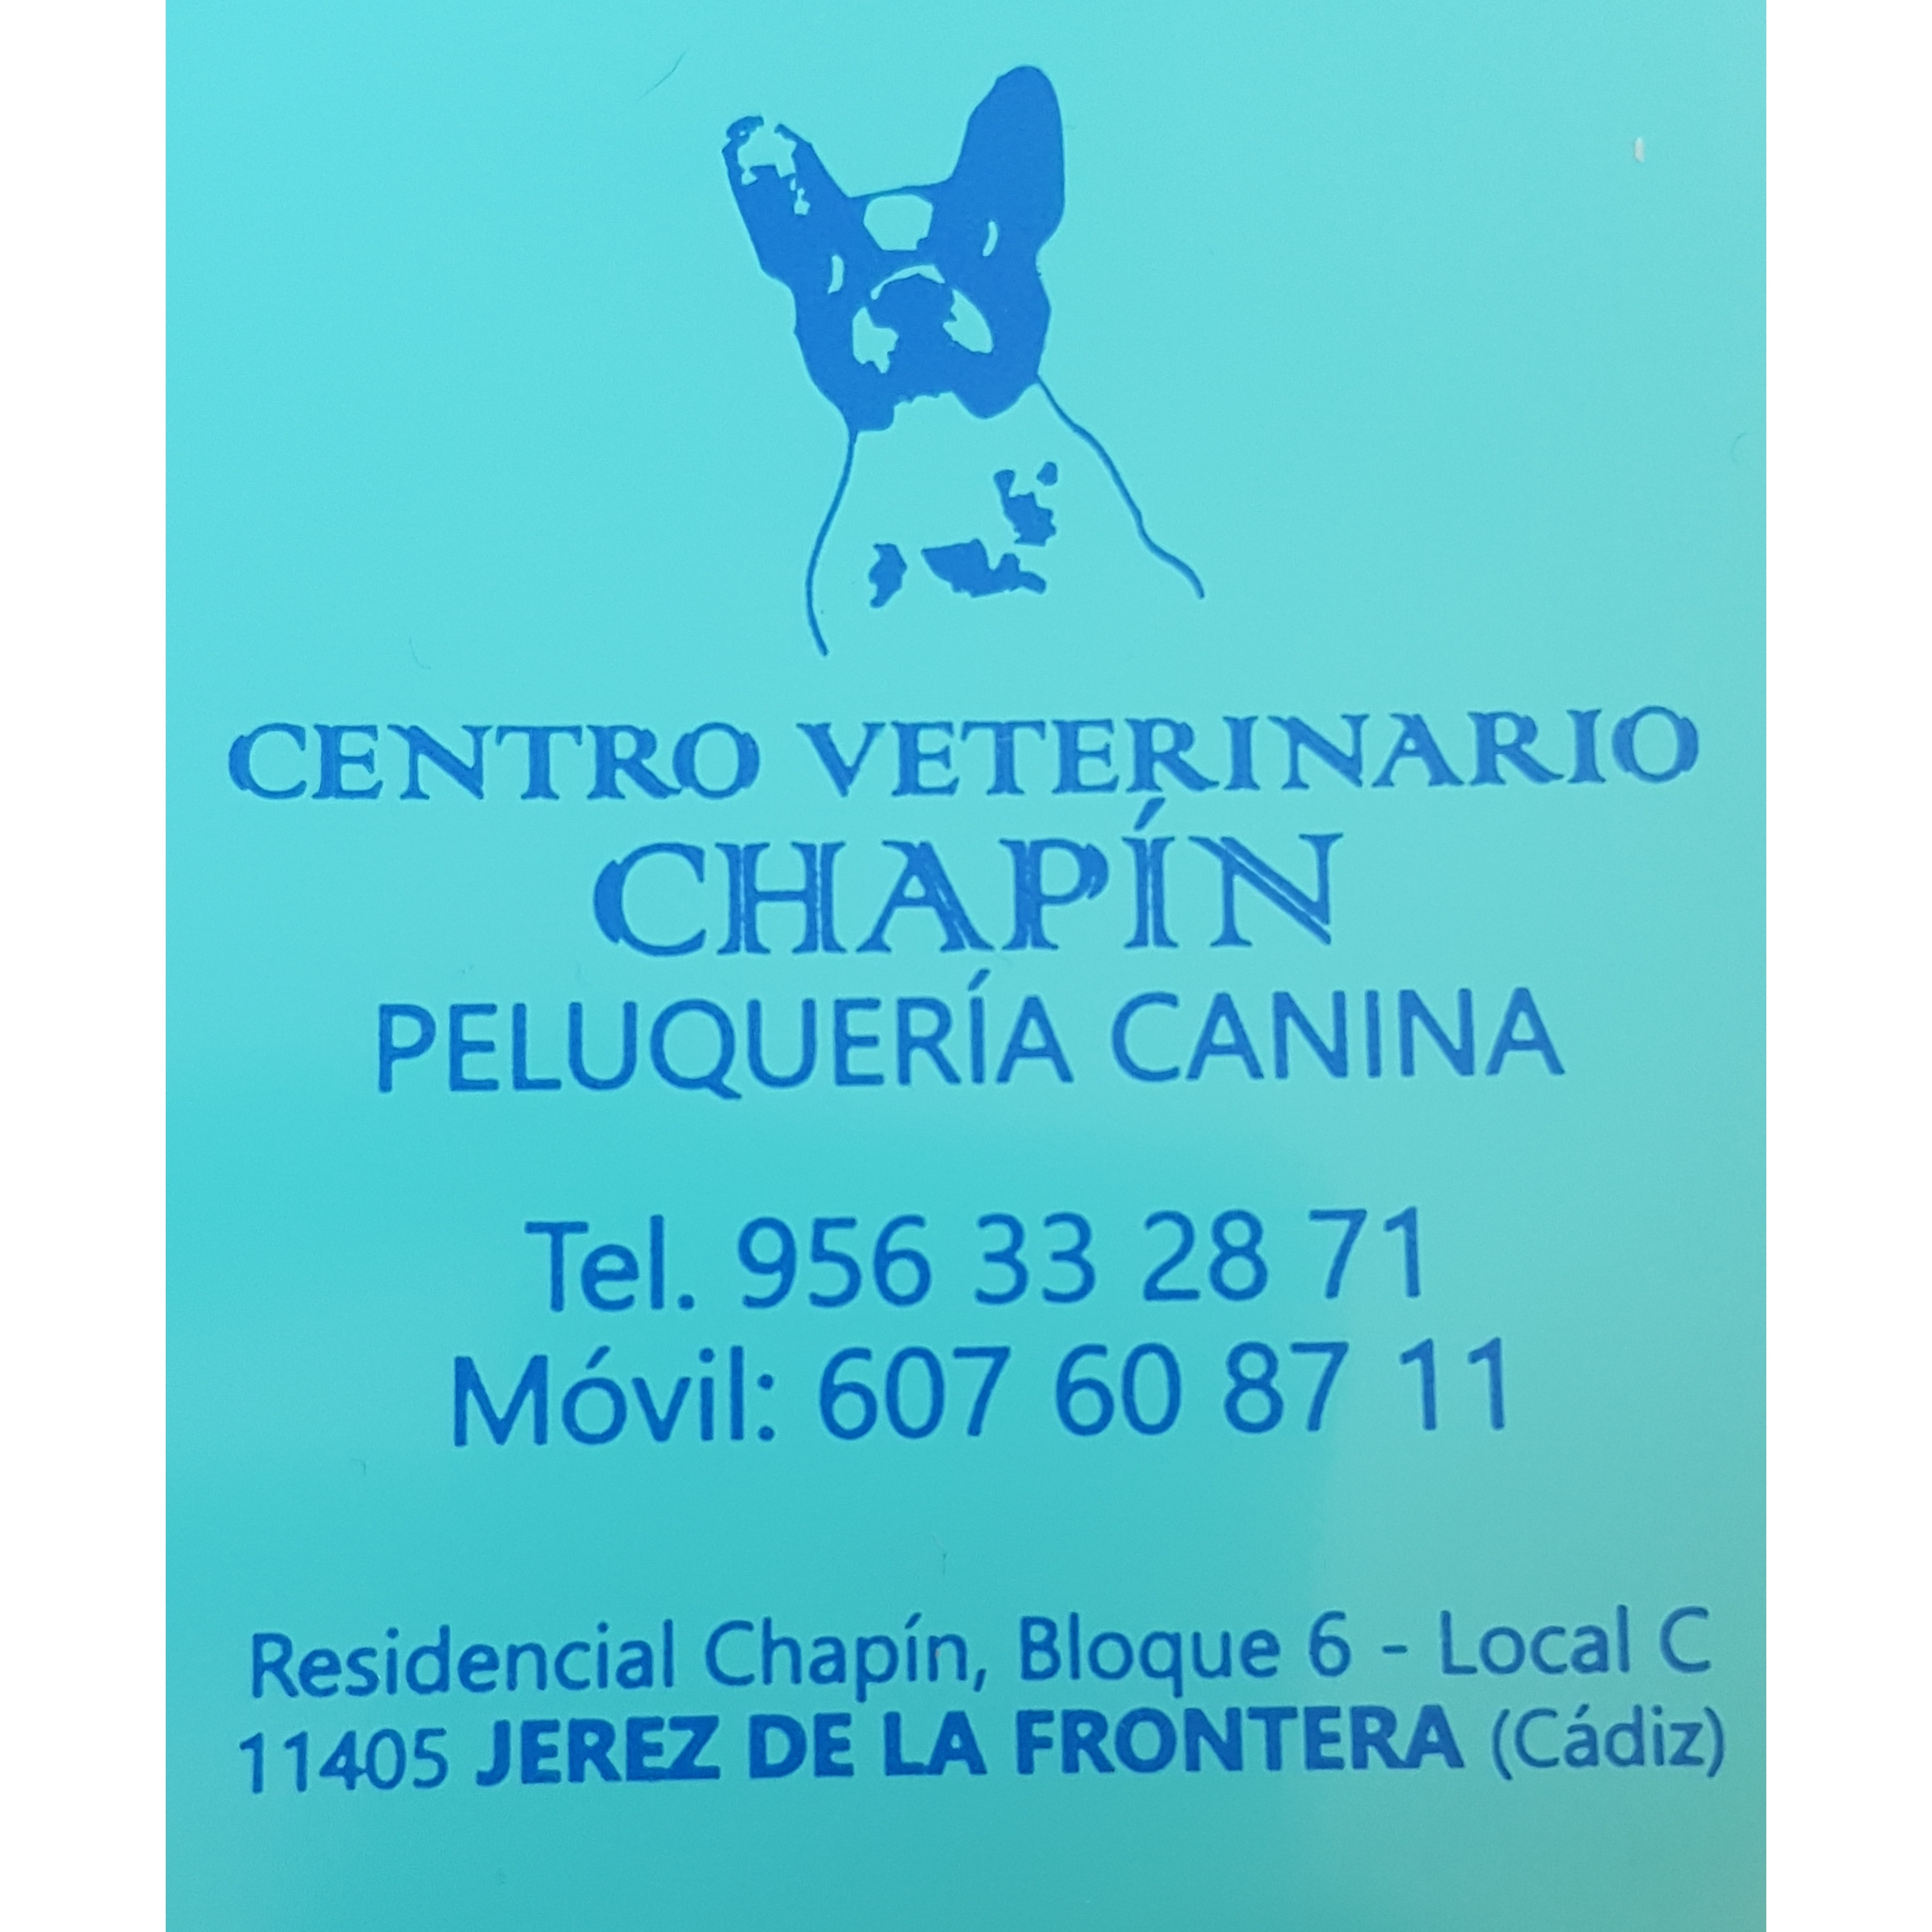 Centro Veterinario Chapín - Animal Hospital - Jerez de la Frontera - 956 33 28 71 Spain | ShowMeLocal.com